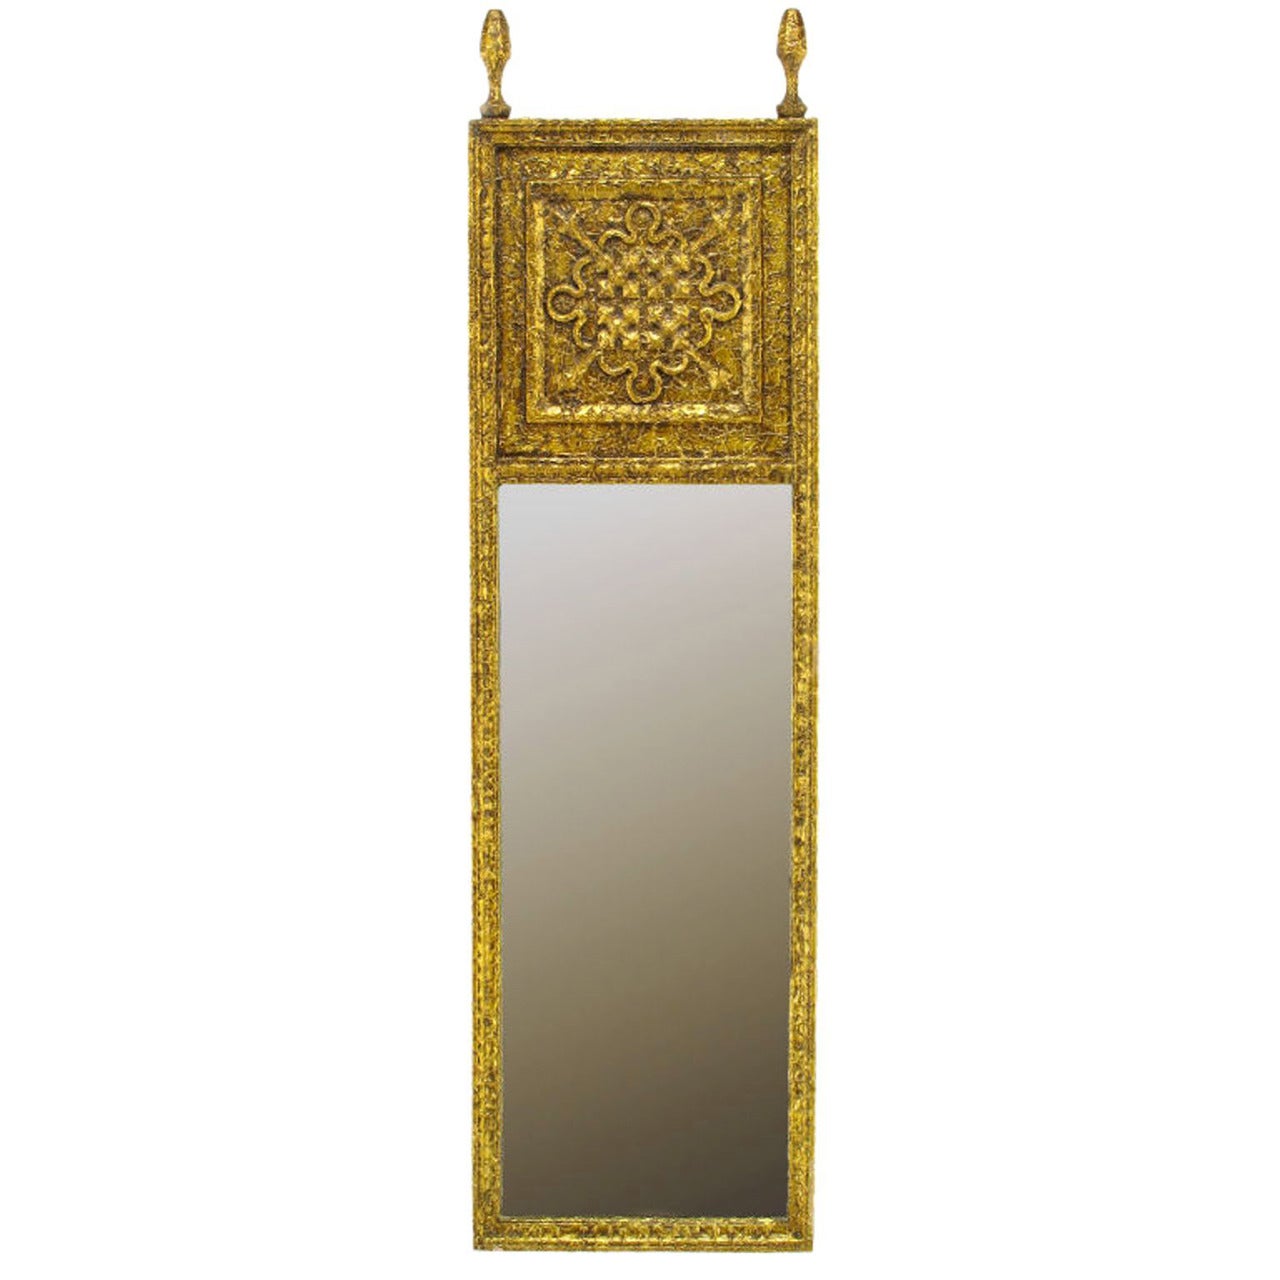 Gilt Moorish Trumeau Mirror With Finials & Arrow Cartouche